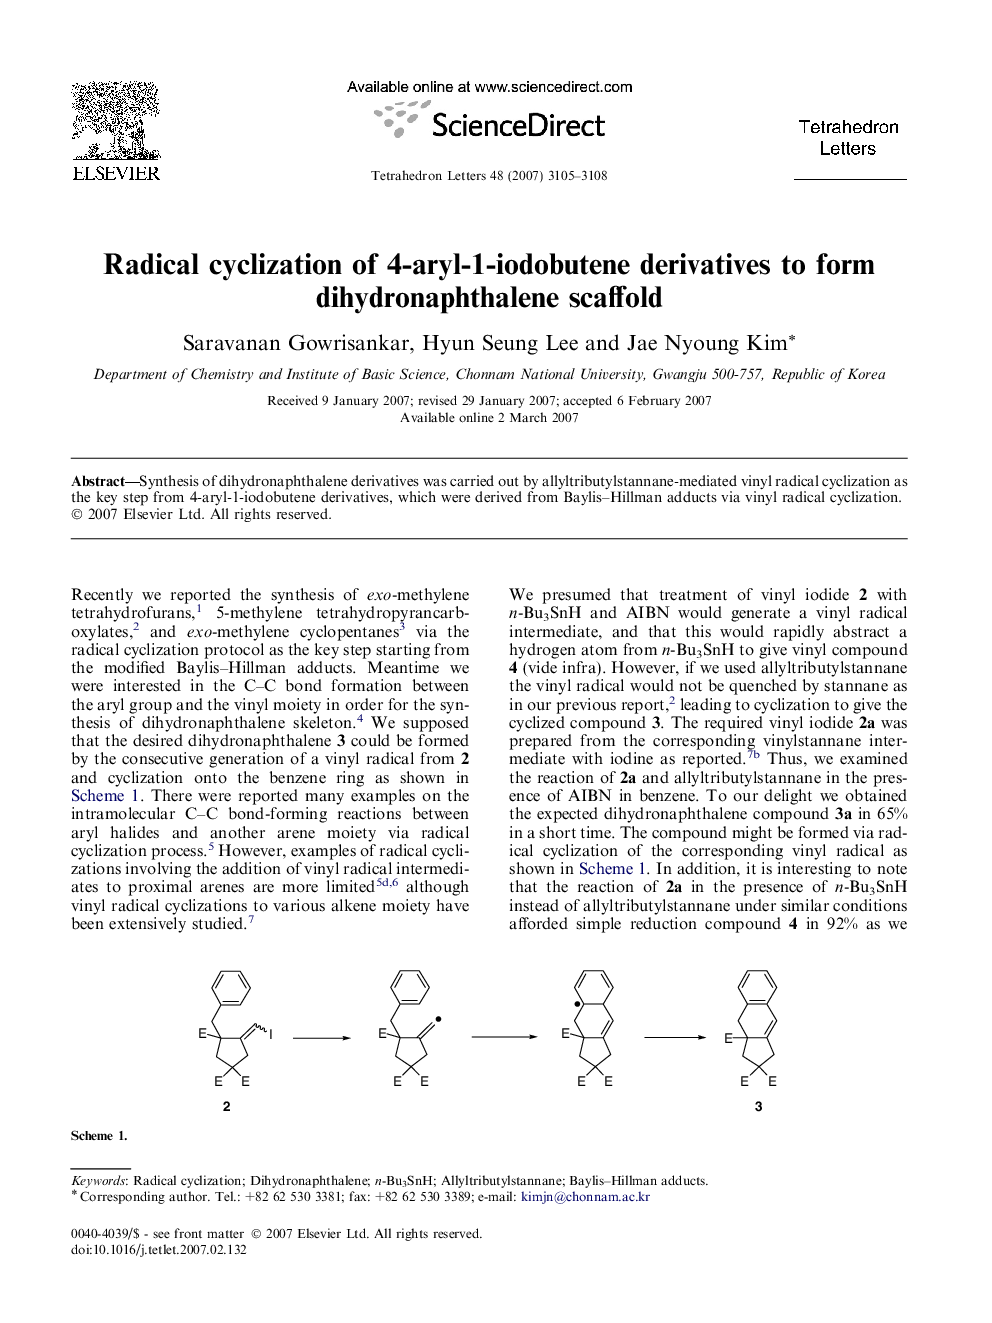 Radical cyclization of 4-aryl-1-iodobutene derivatives to form dihydronaphthalene scaffold